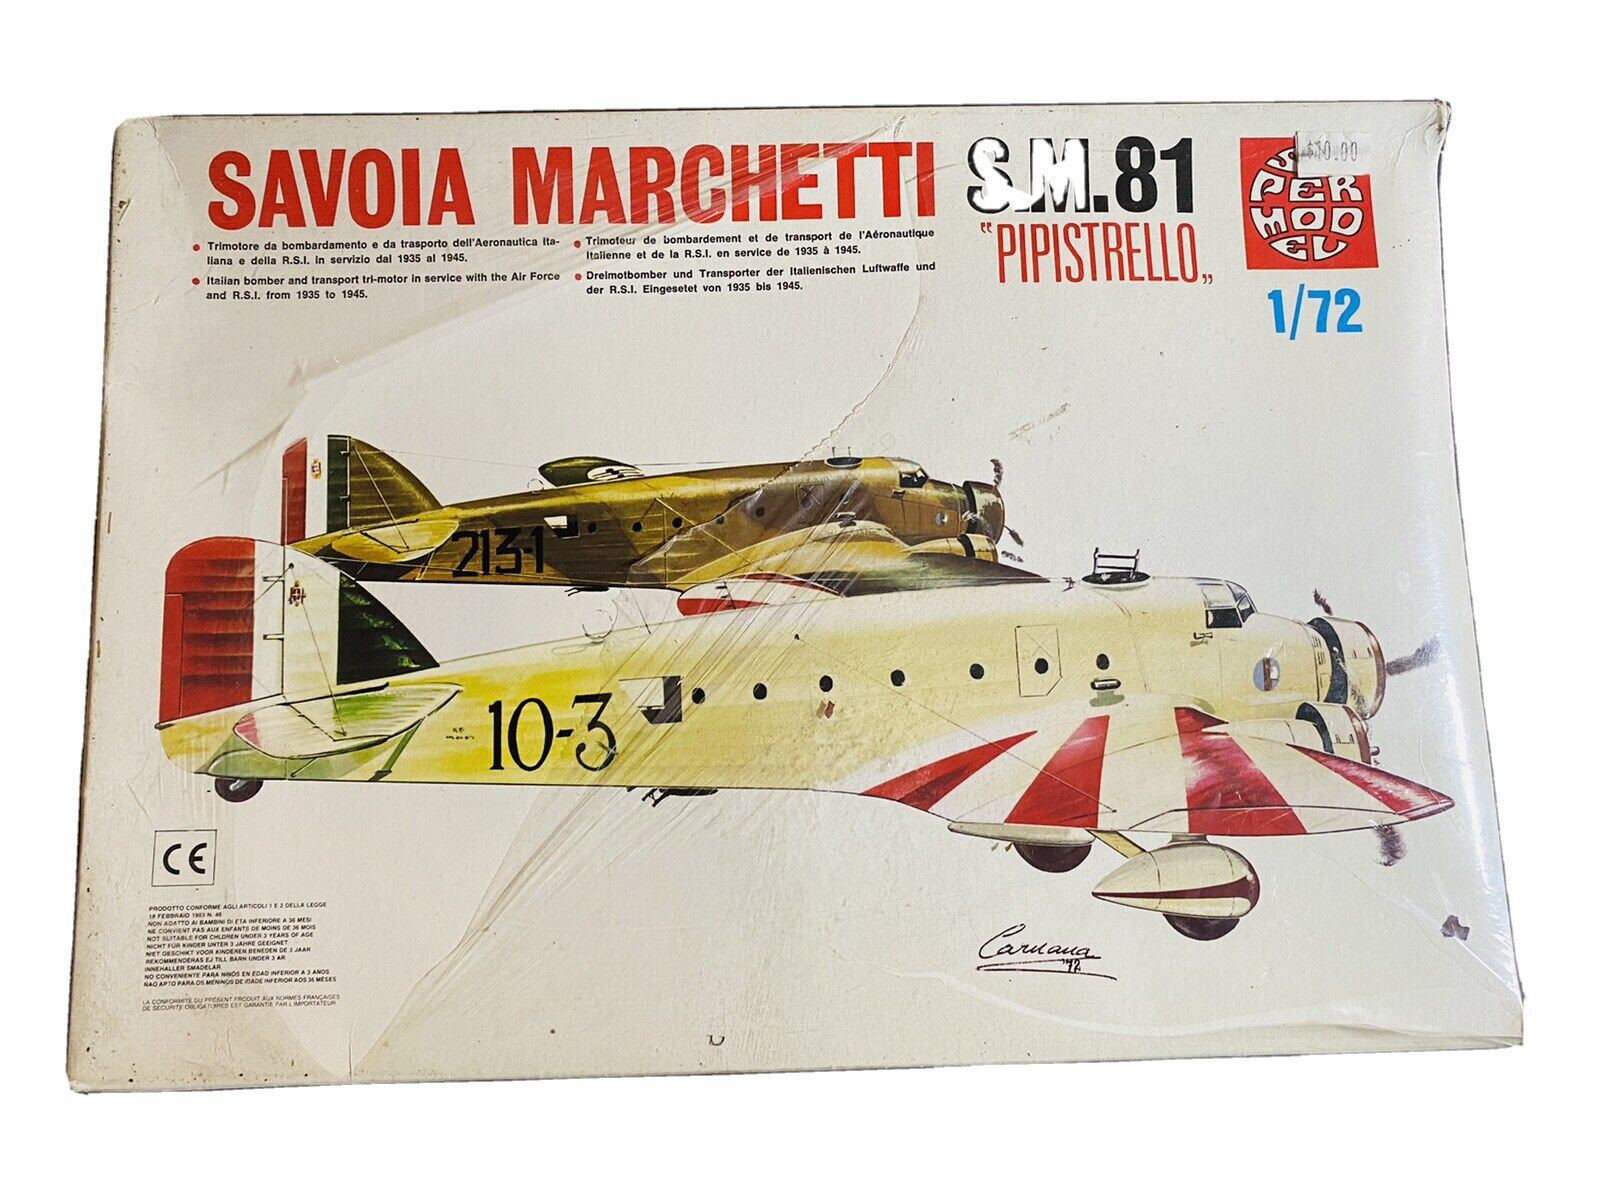 Savoia Marchetti S.M.81 “PIPISTRELLO” 1/72 Model Jet Military Rare  Vintage